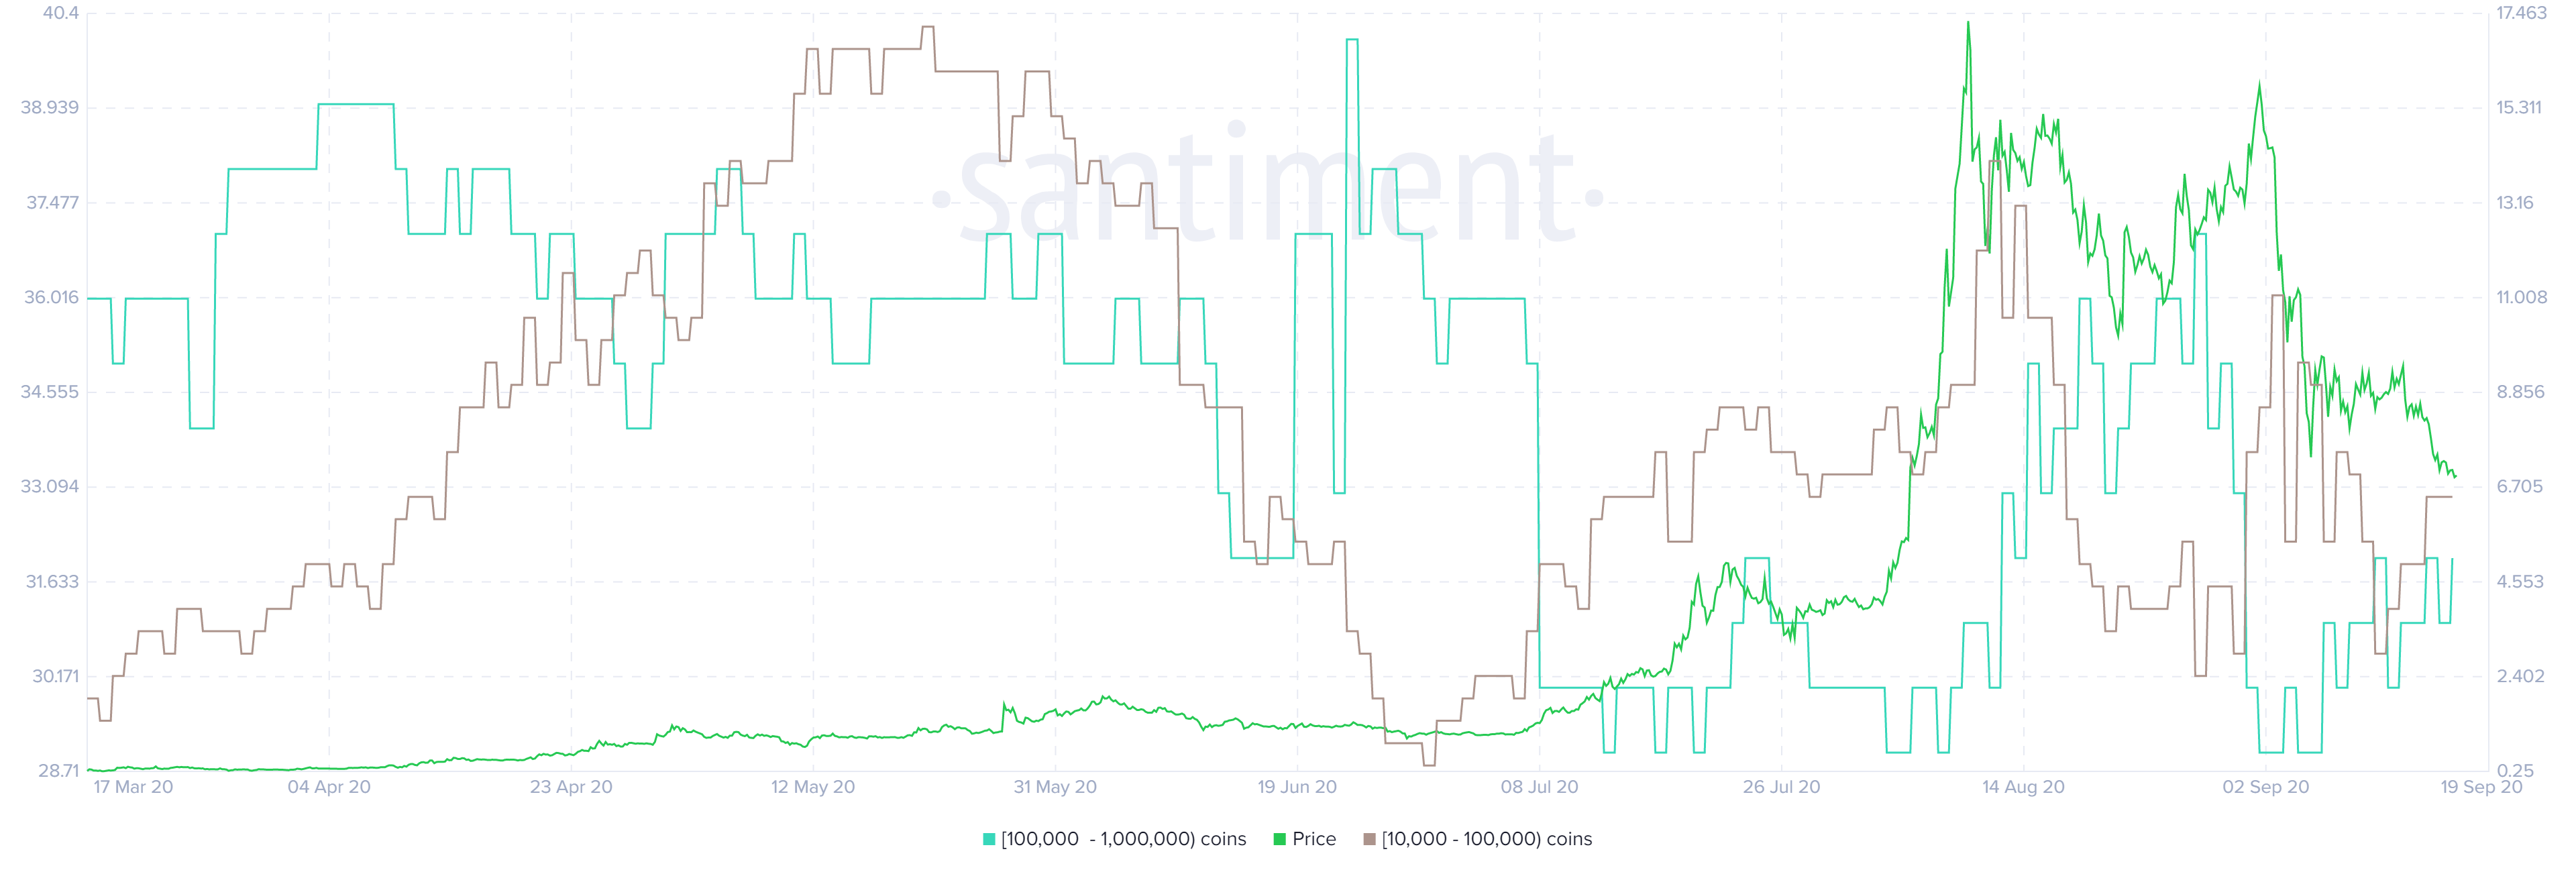 BAND/USD price chart